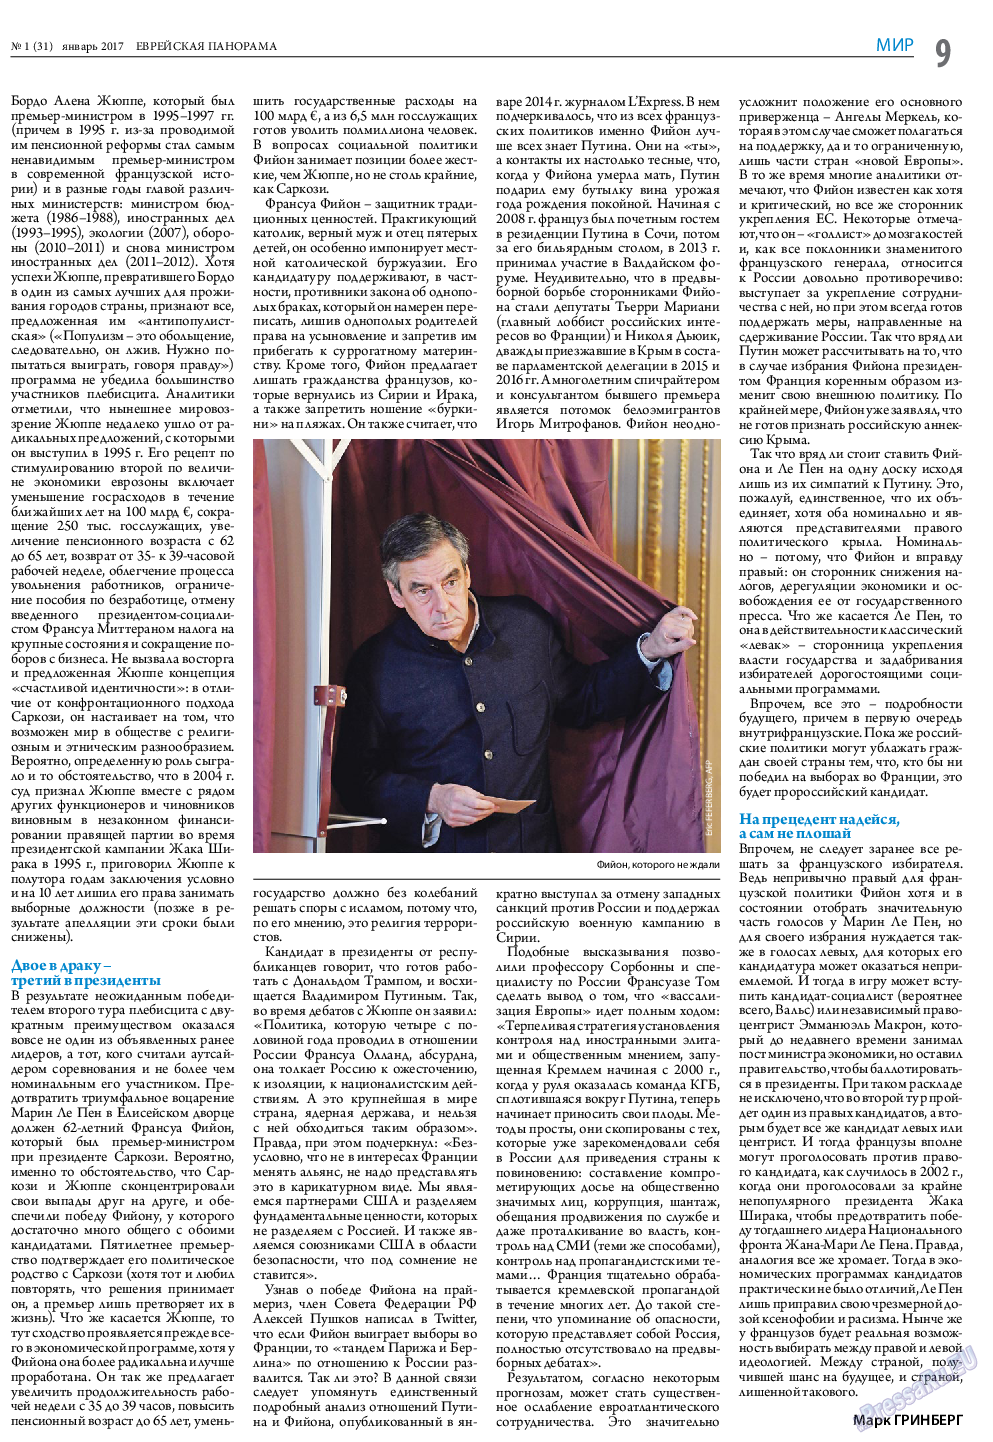 Еврейская панорама, газета. 2017 №1 стр.9